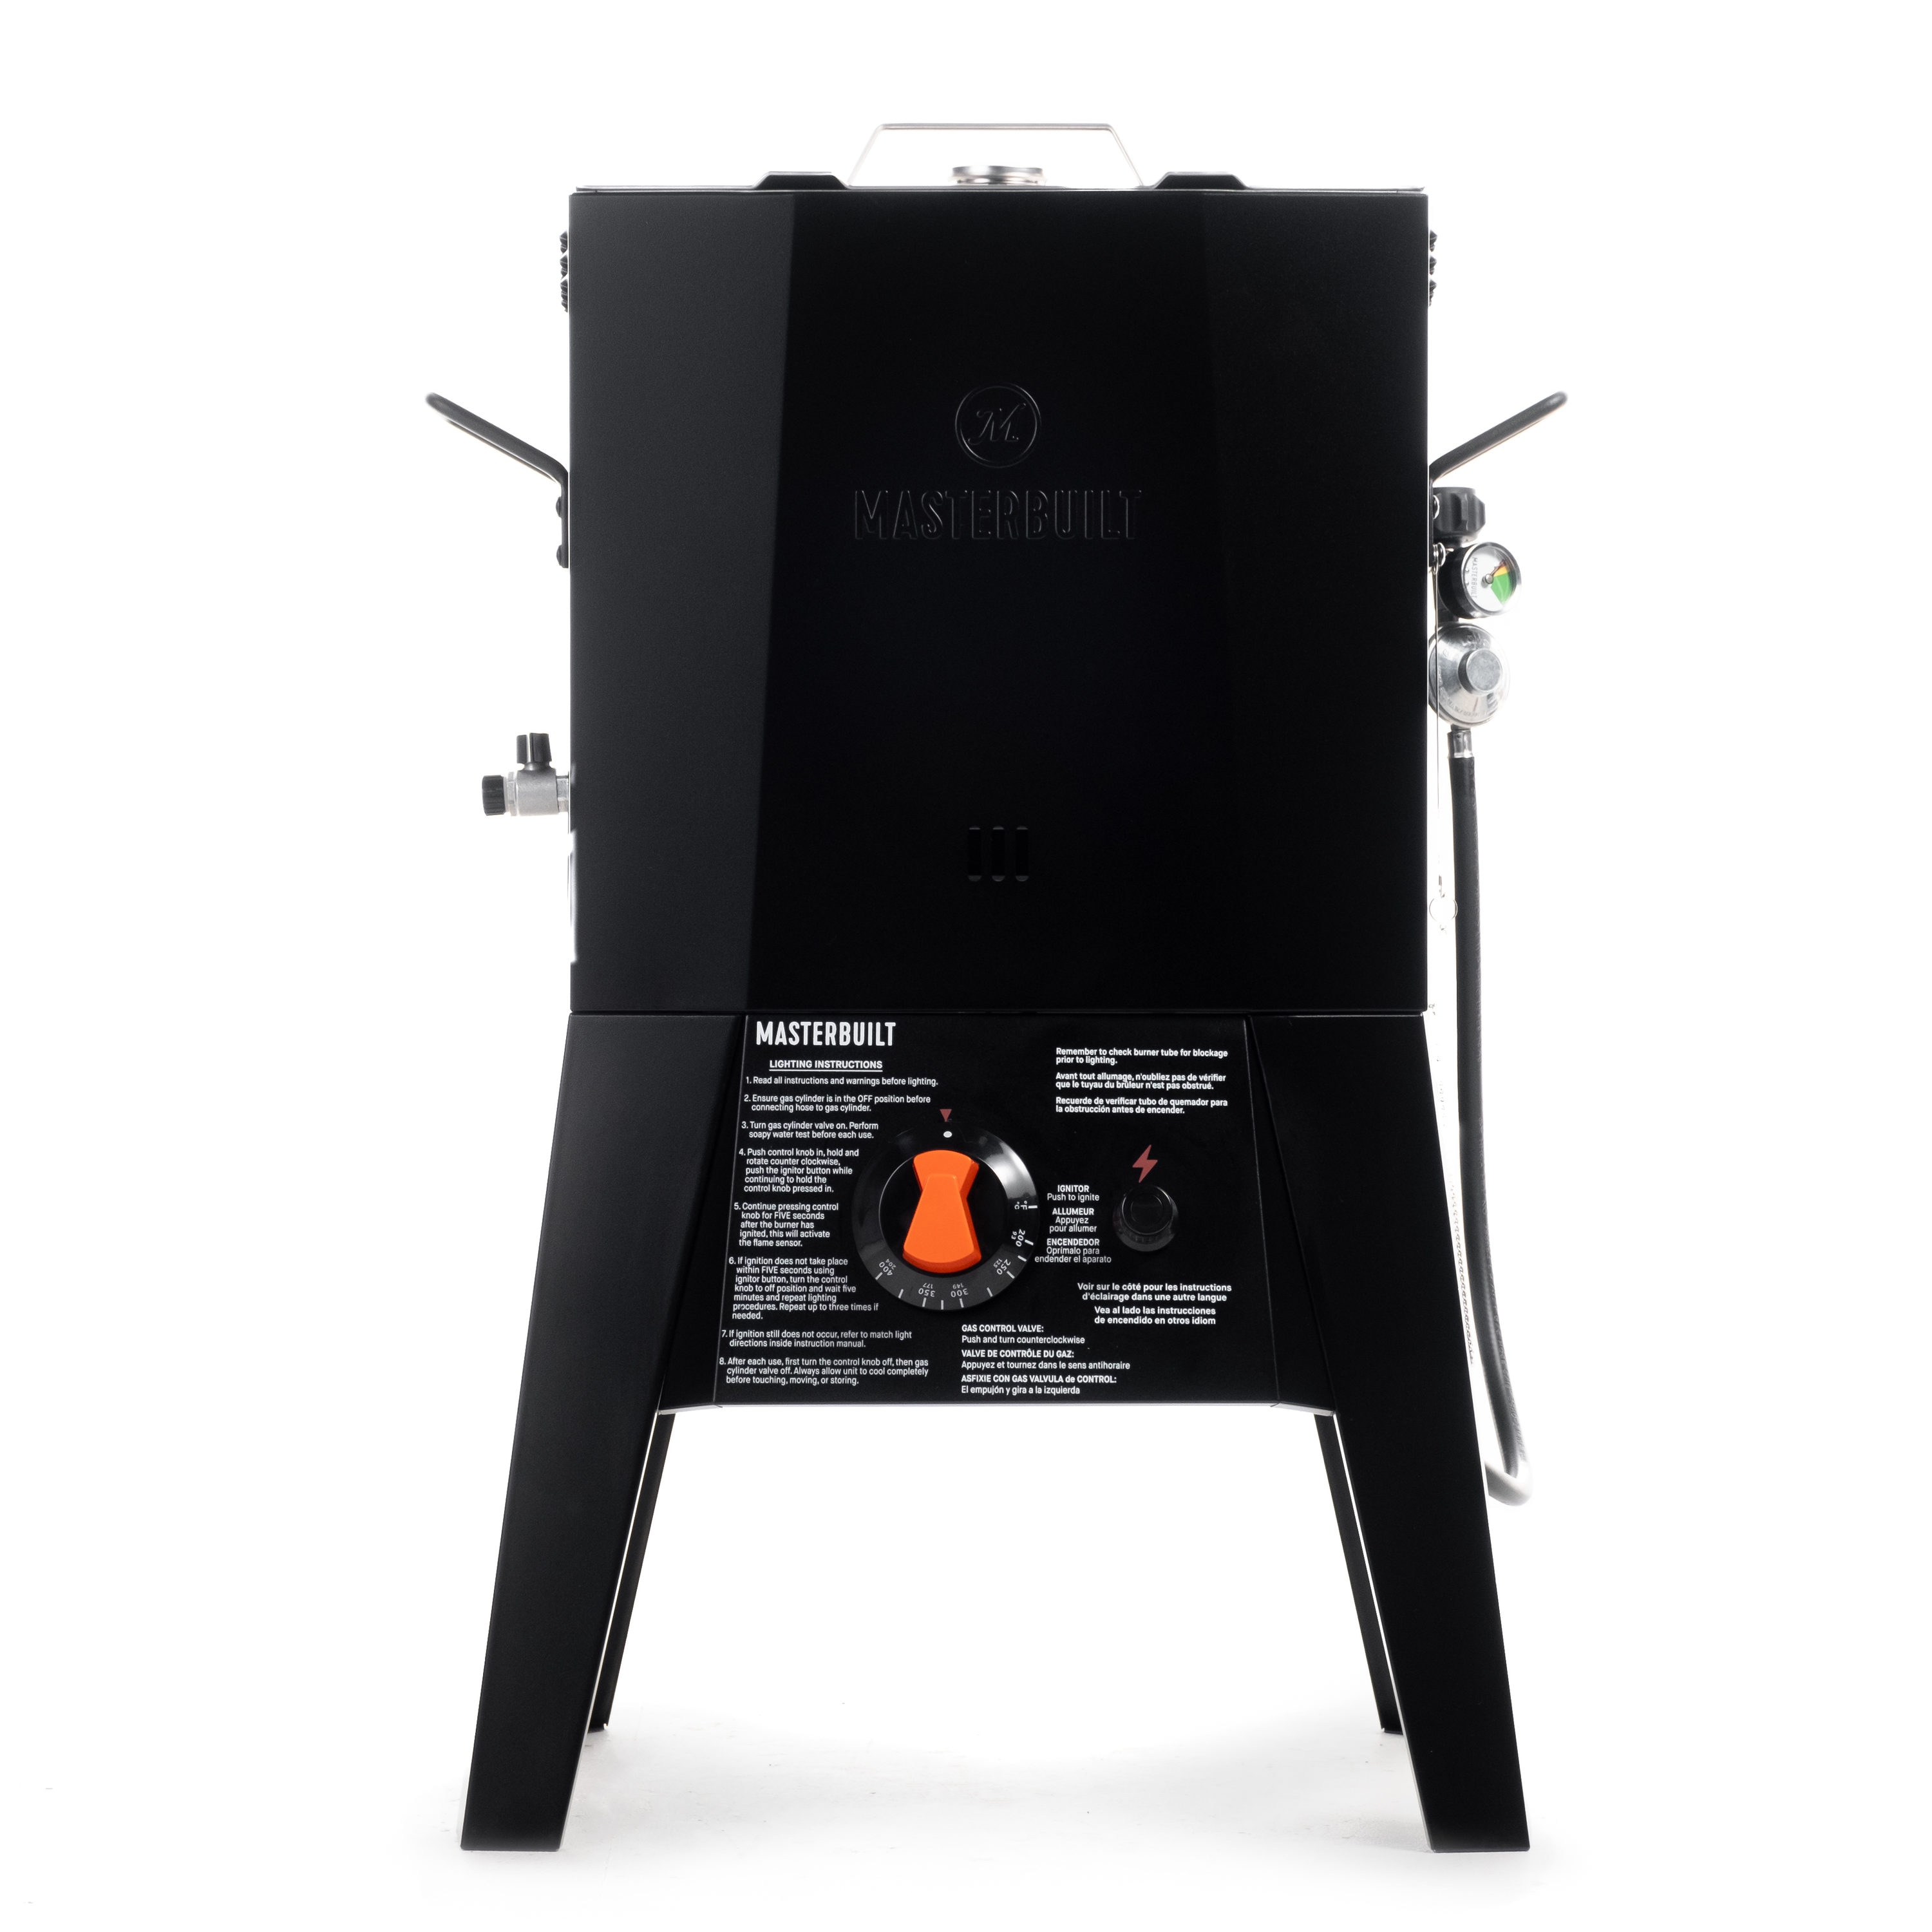  Customer reviews: Masterbuilt MB20013020 6-in-1 Outdoor Air  Fryer, Black